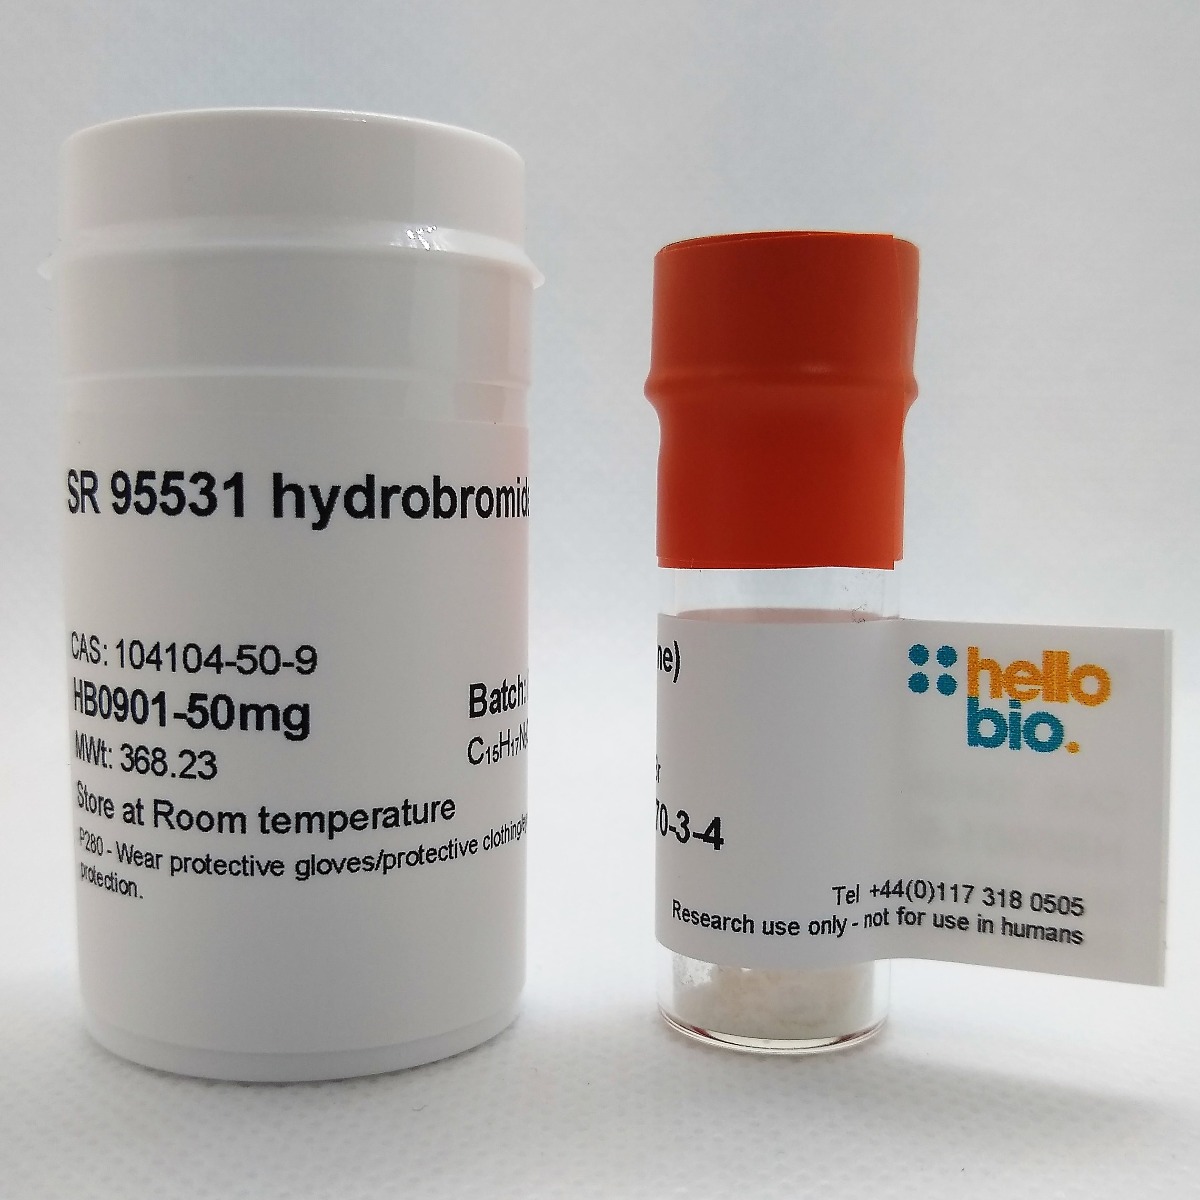 SR 95531 hydrobromide (Gabazine) product vial image | Hello Bio